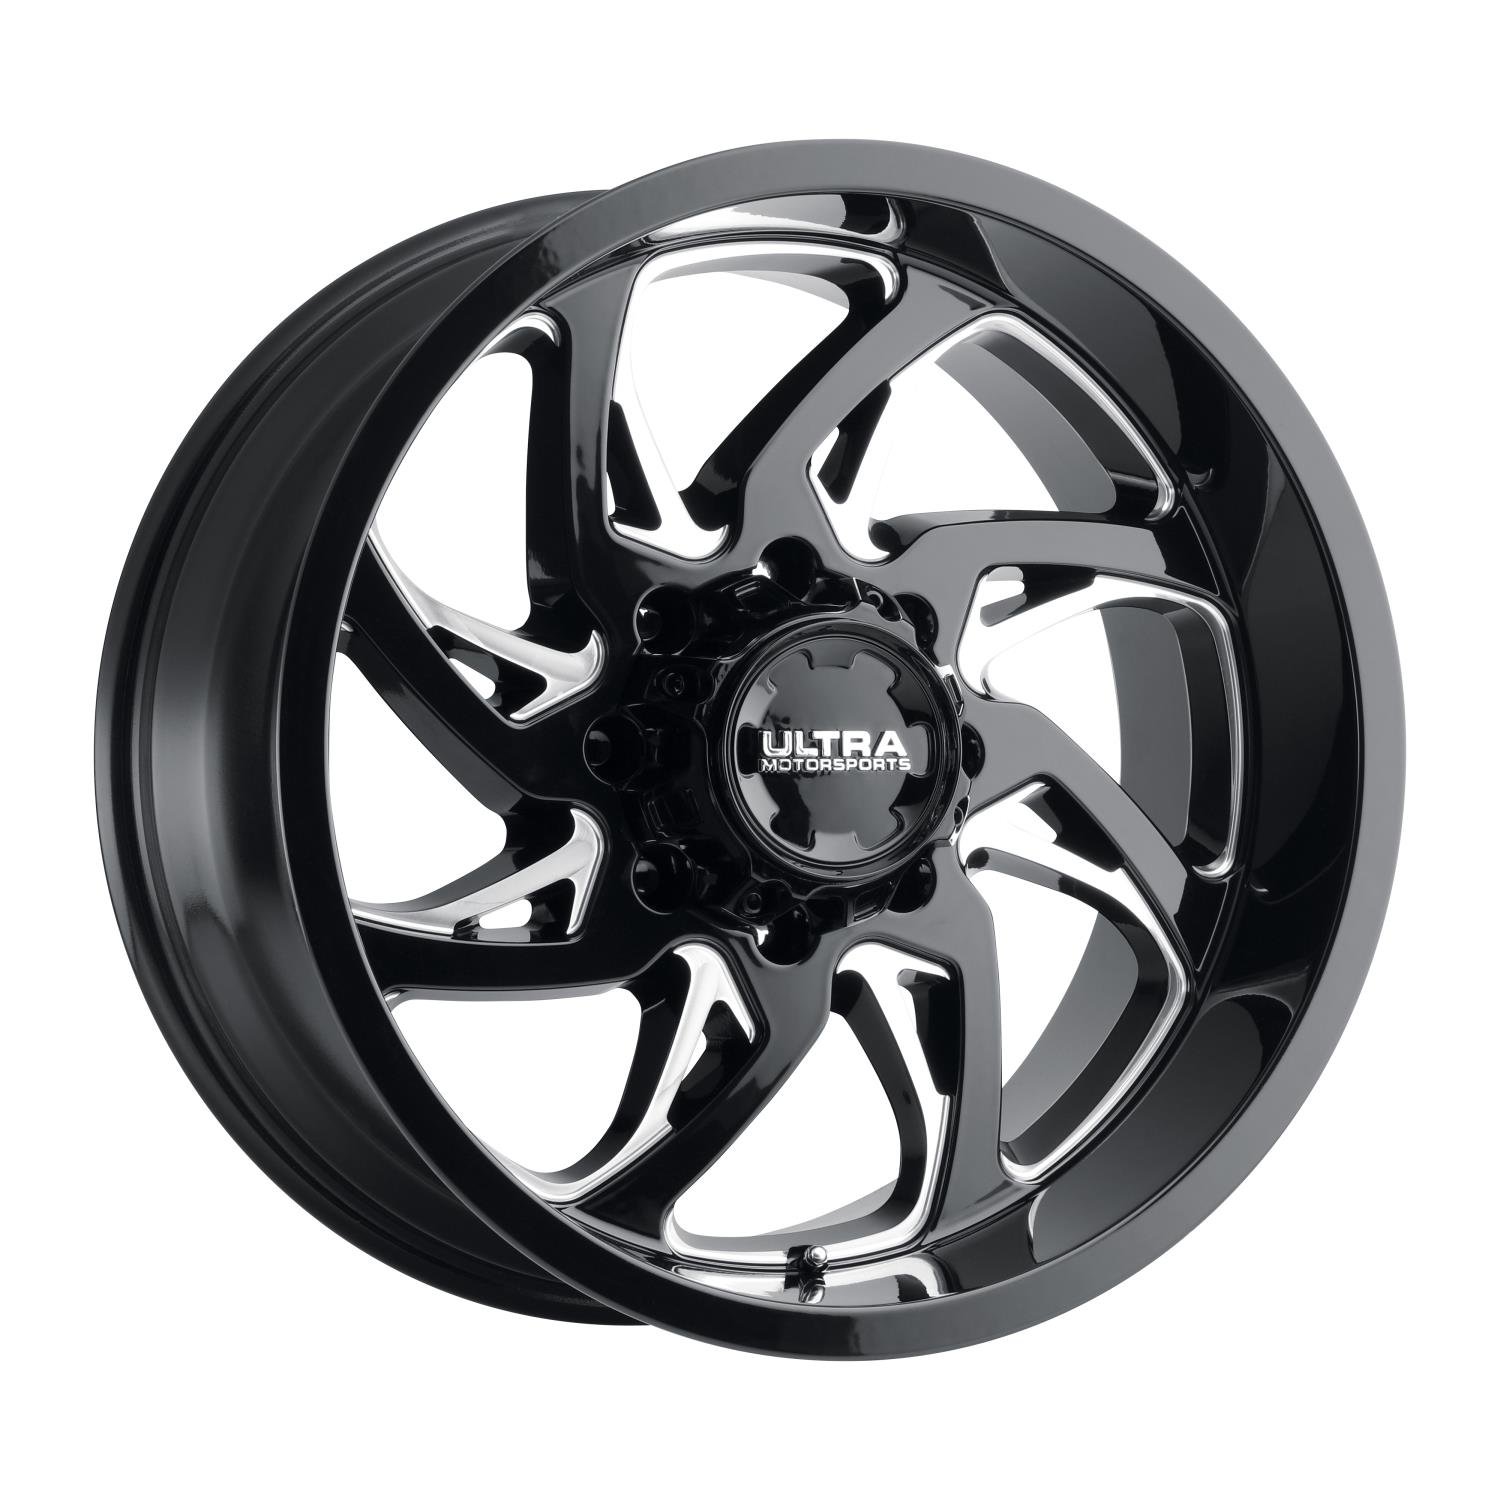 230-Series Villain Wheel, Size: 20x9", Bolt Pattern: 5x5.5"/5x5" [Gloss Black w/Milled Accents]